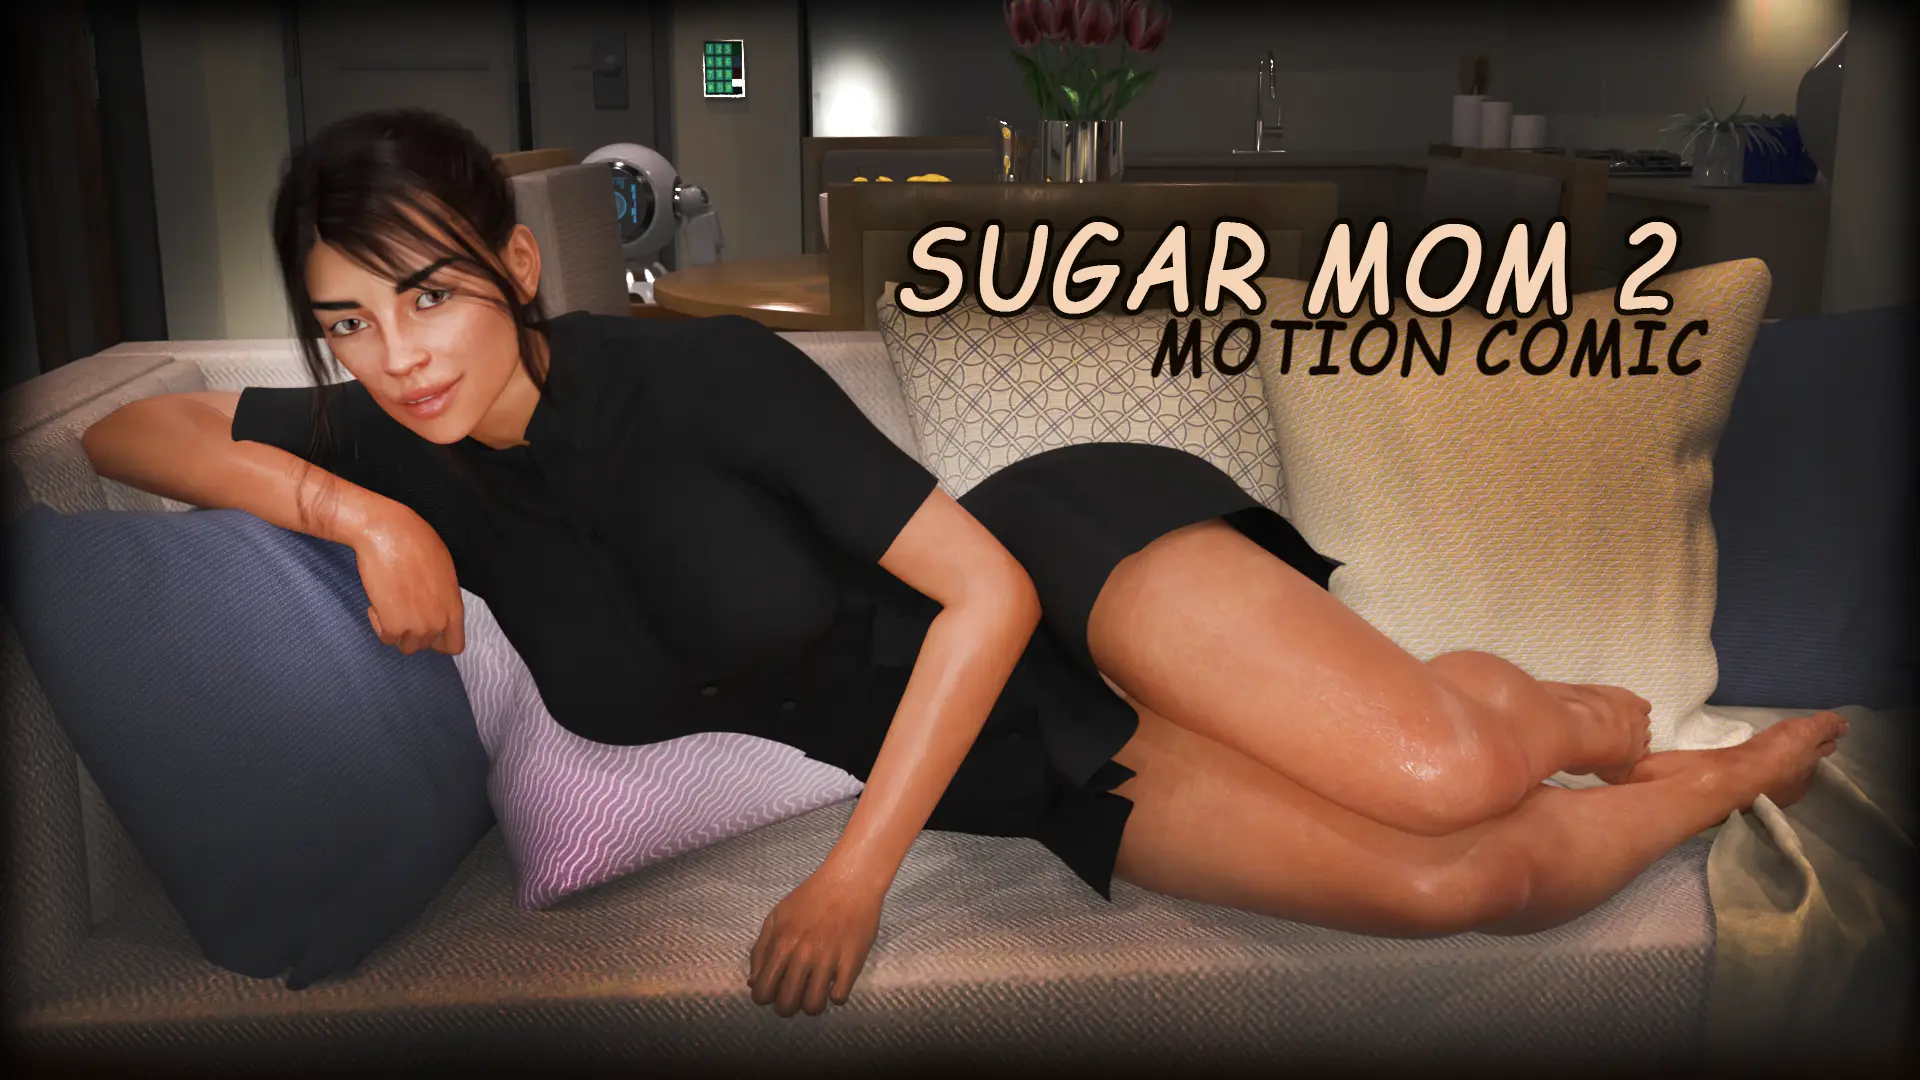 Sugar Mom 2: Motion Comic main image